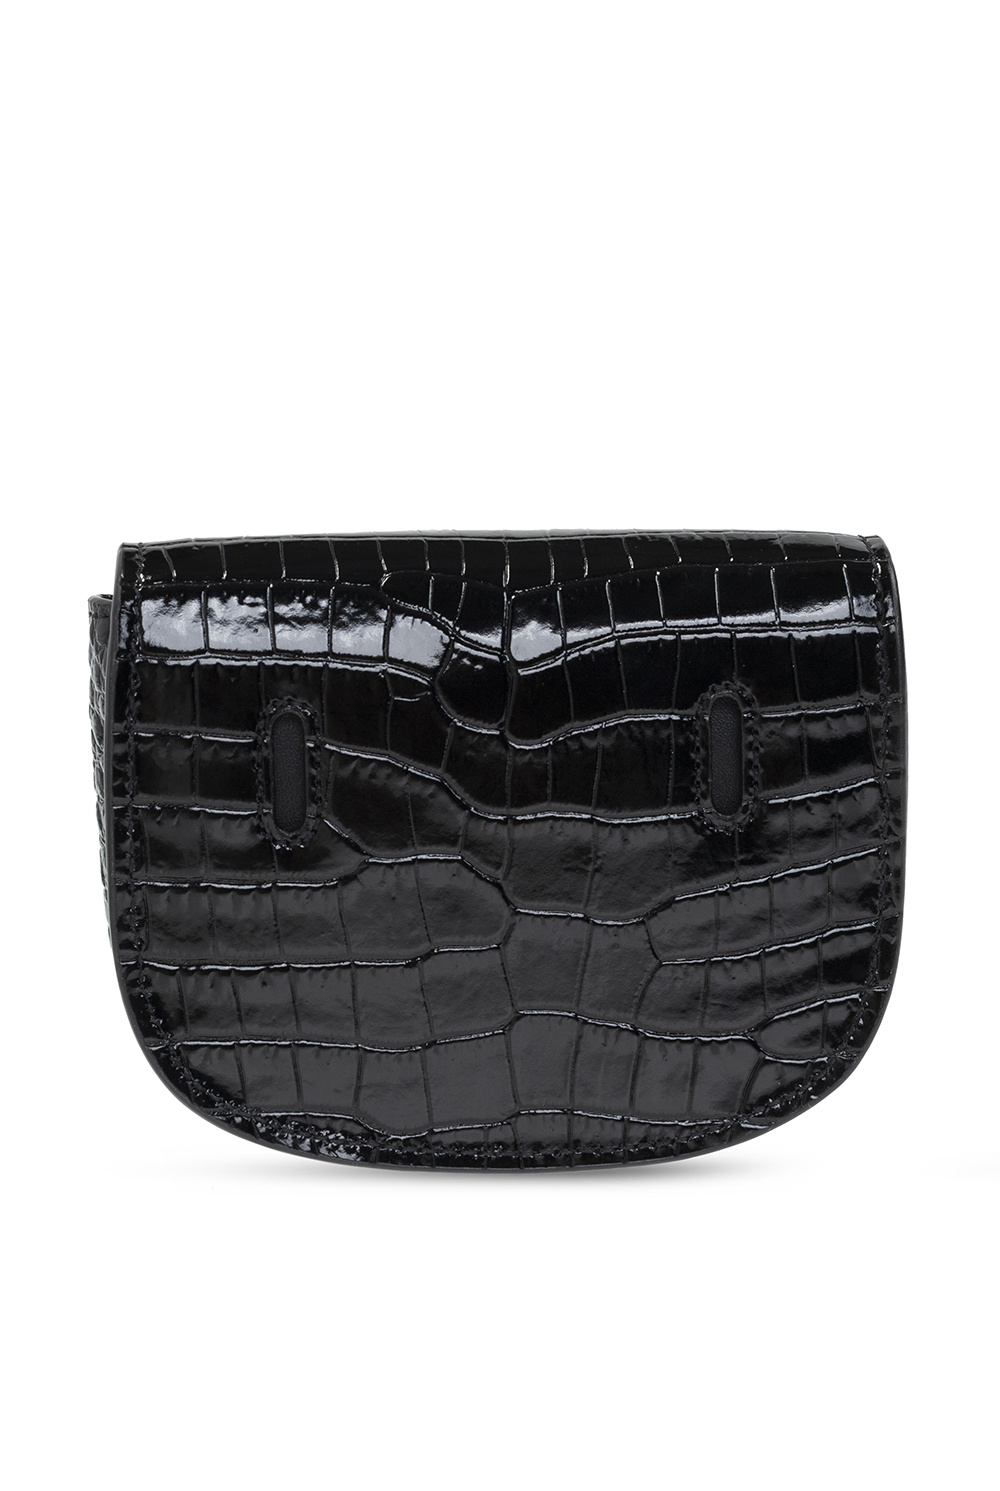 Yves Saint Laurent Black Crocodile Effect Leather Kaia Belt Bag